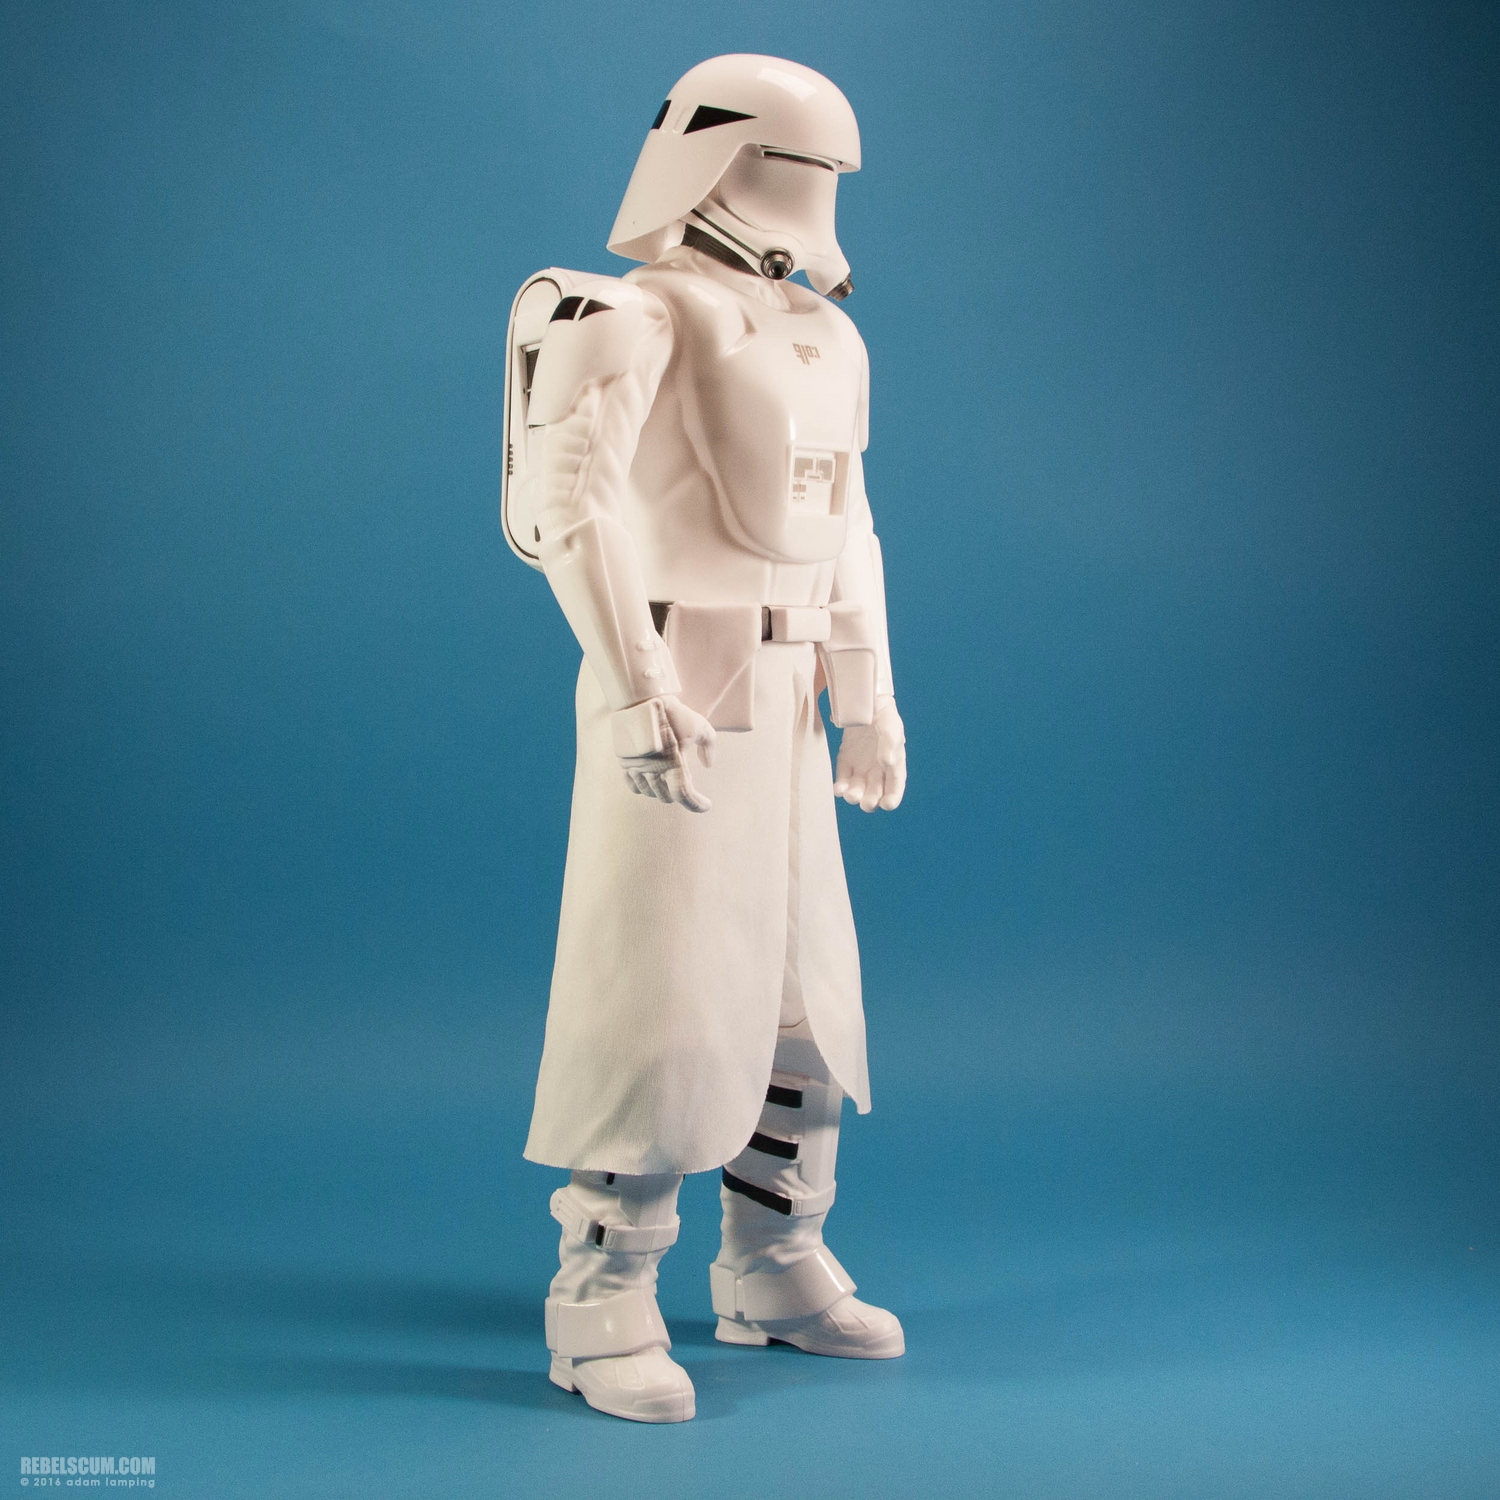 jakks-pacific-first-order-snowtrooper-18-inch-figure-010.jpg